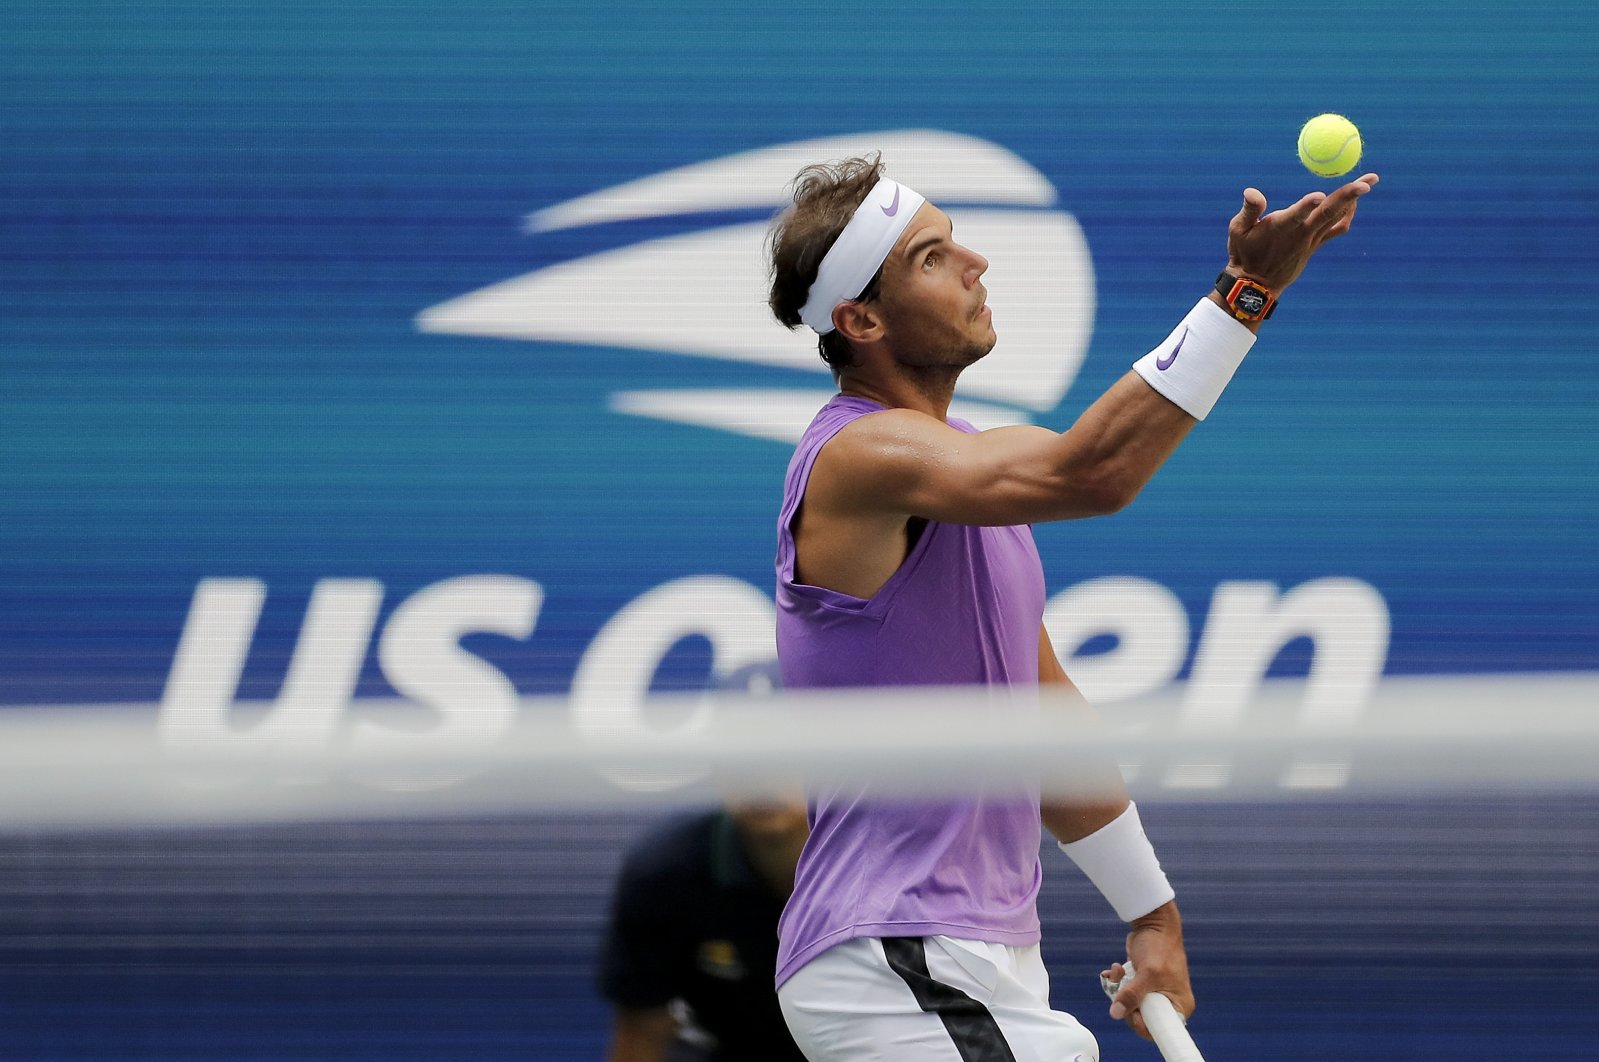 Rafael Nadal serves during a U.S. Open tennis championship match in New York, U.S., Aug. 31, 2019. (AP Photo)